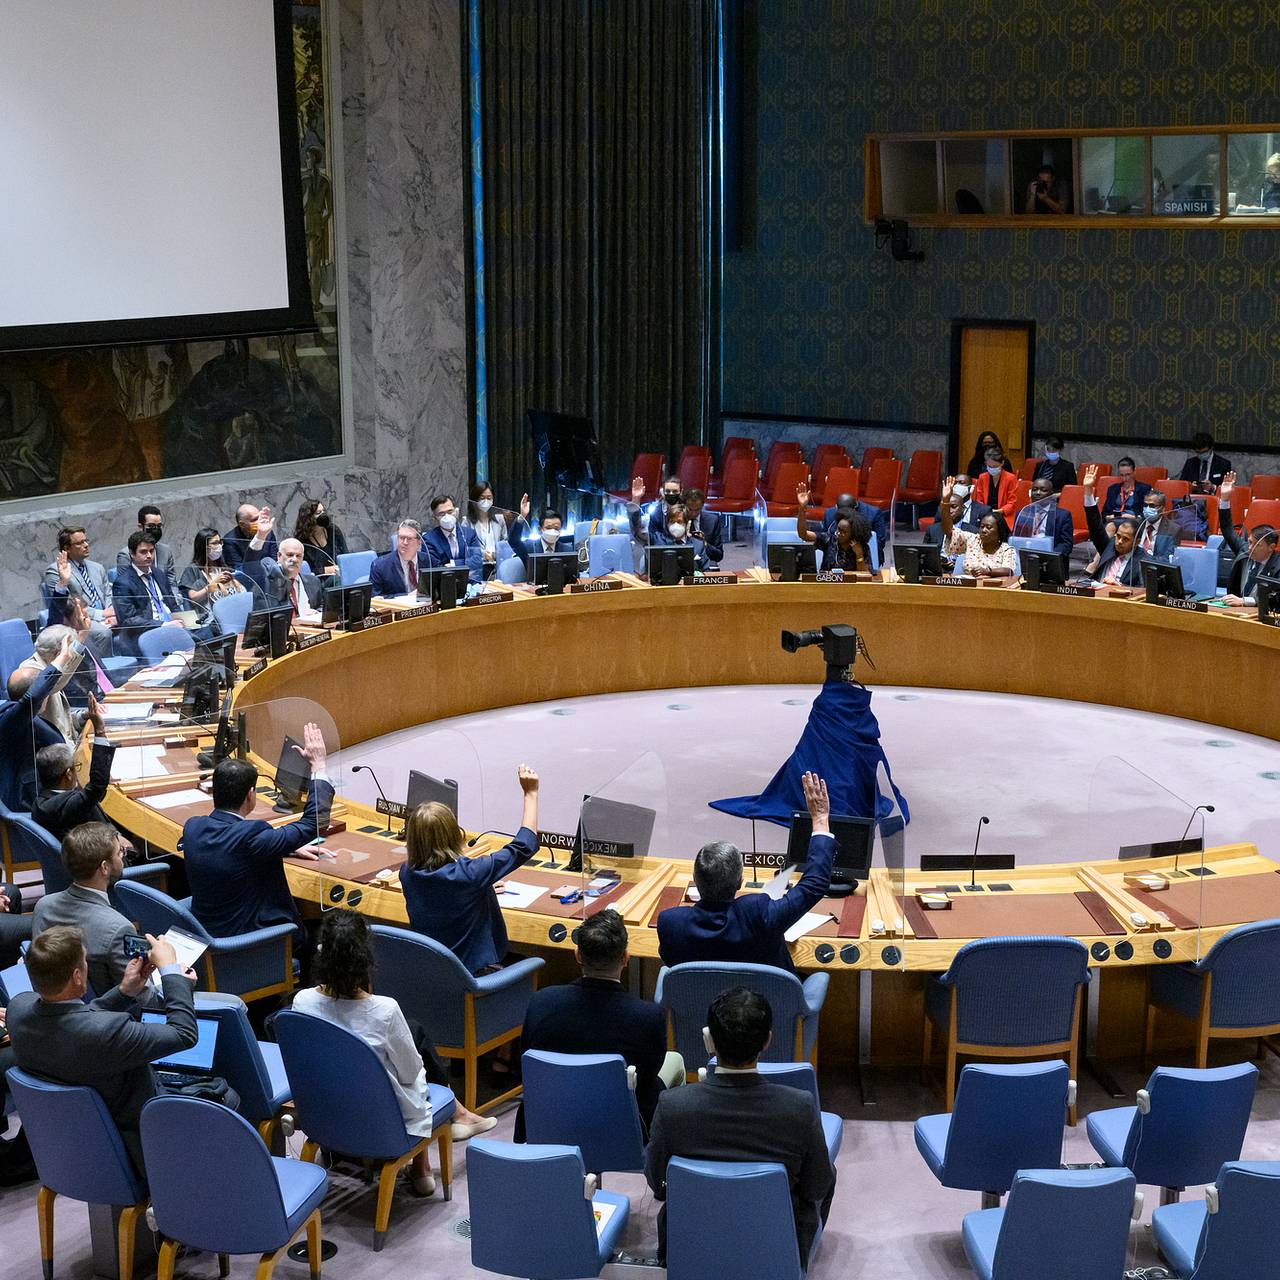 Оон 21. Совет безопасности ООН. Фархан хак ООН. Зал Совбеза ООН. Совет безопасности ООН фото.